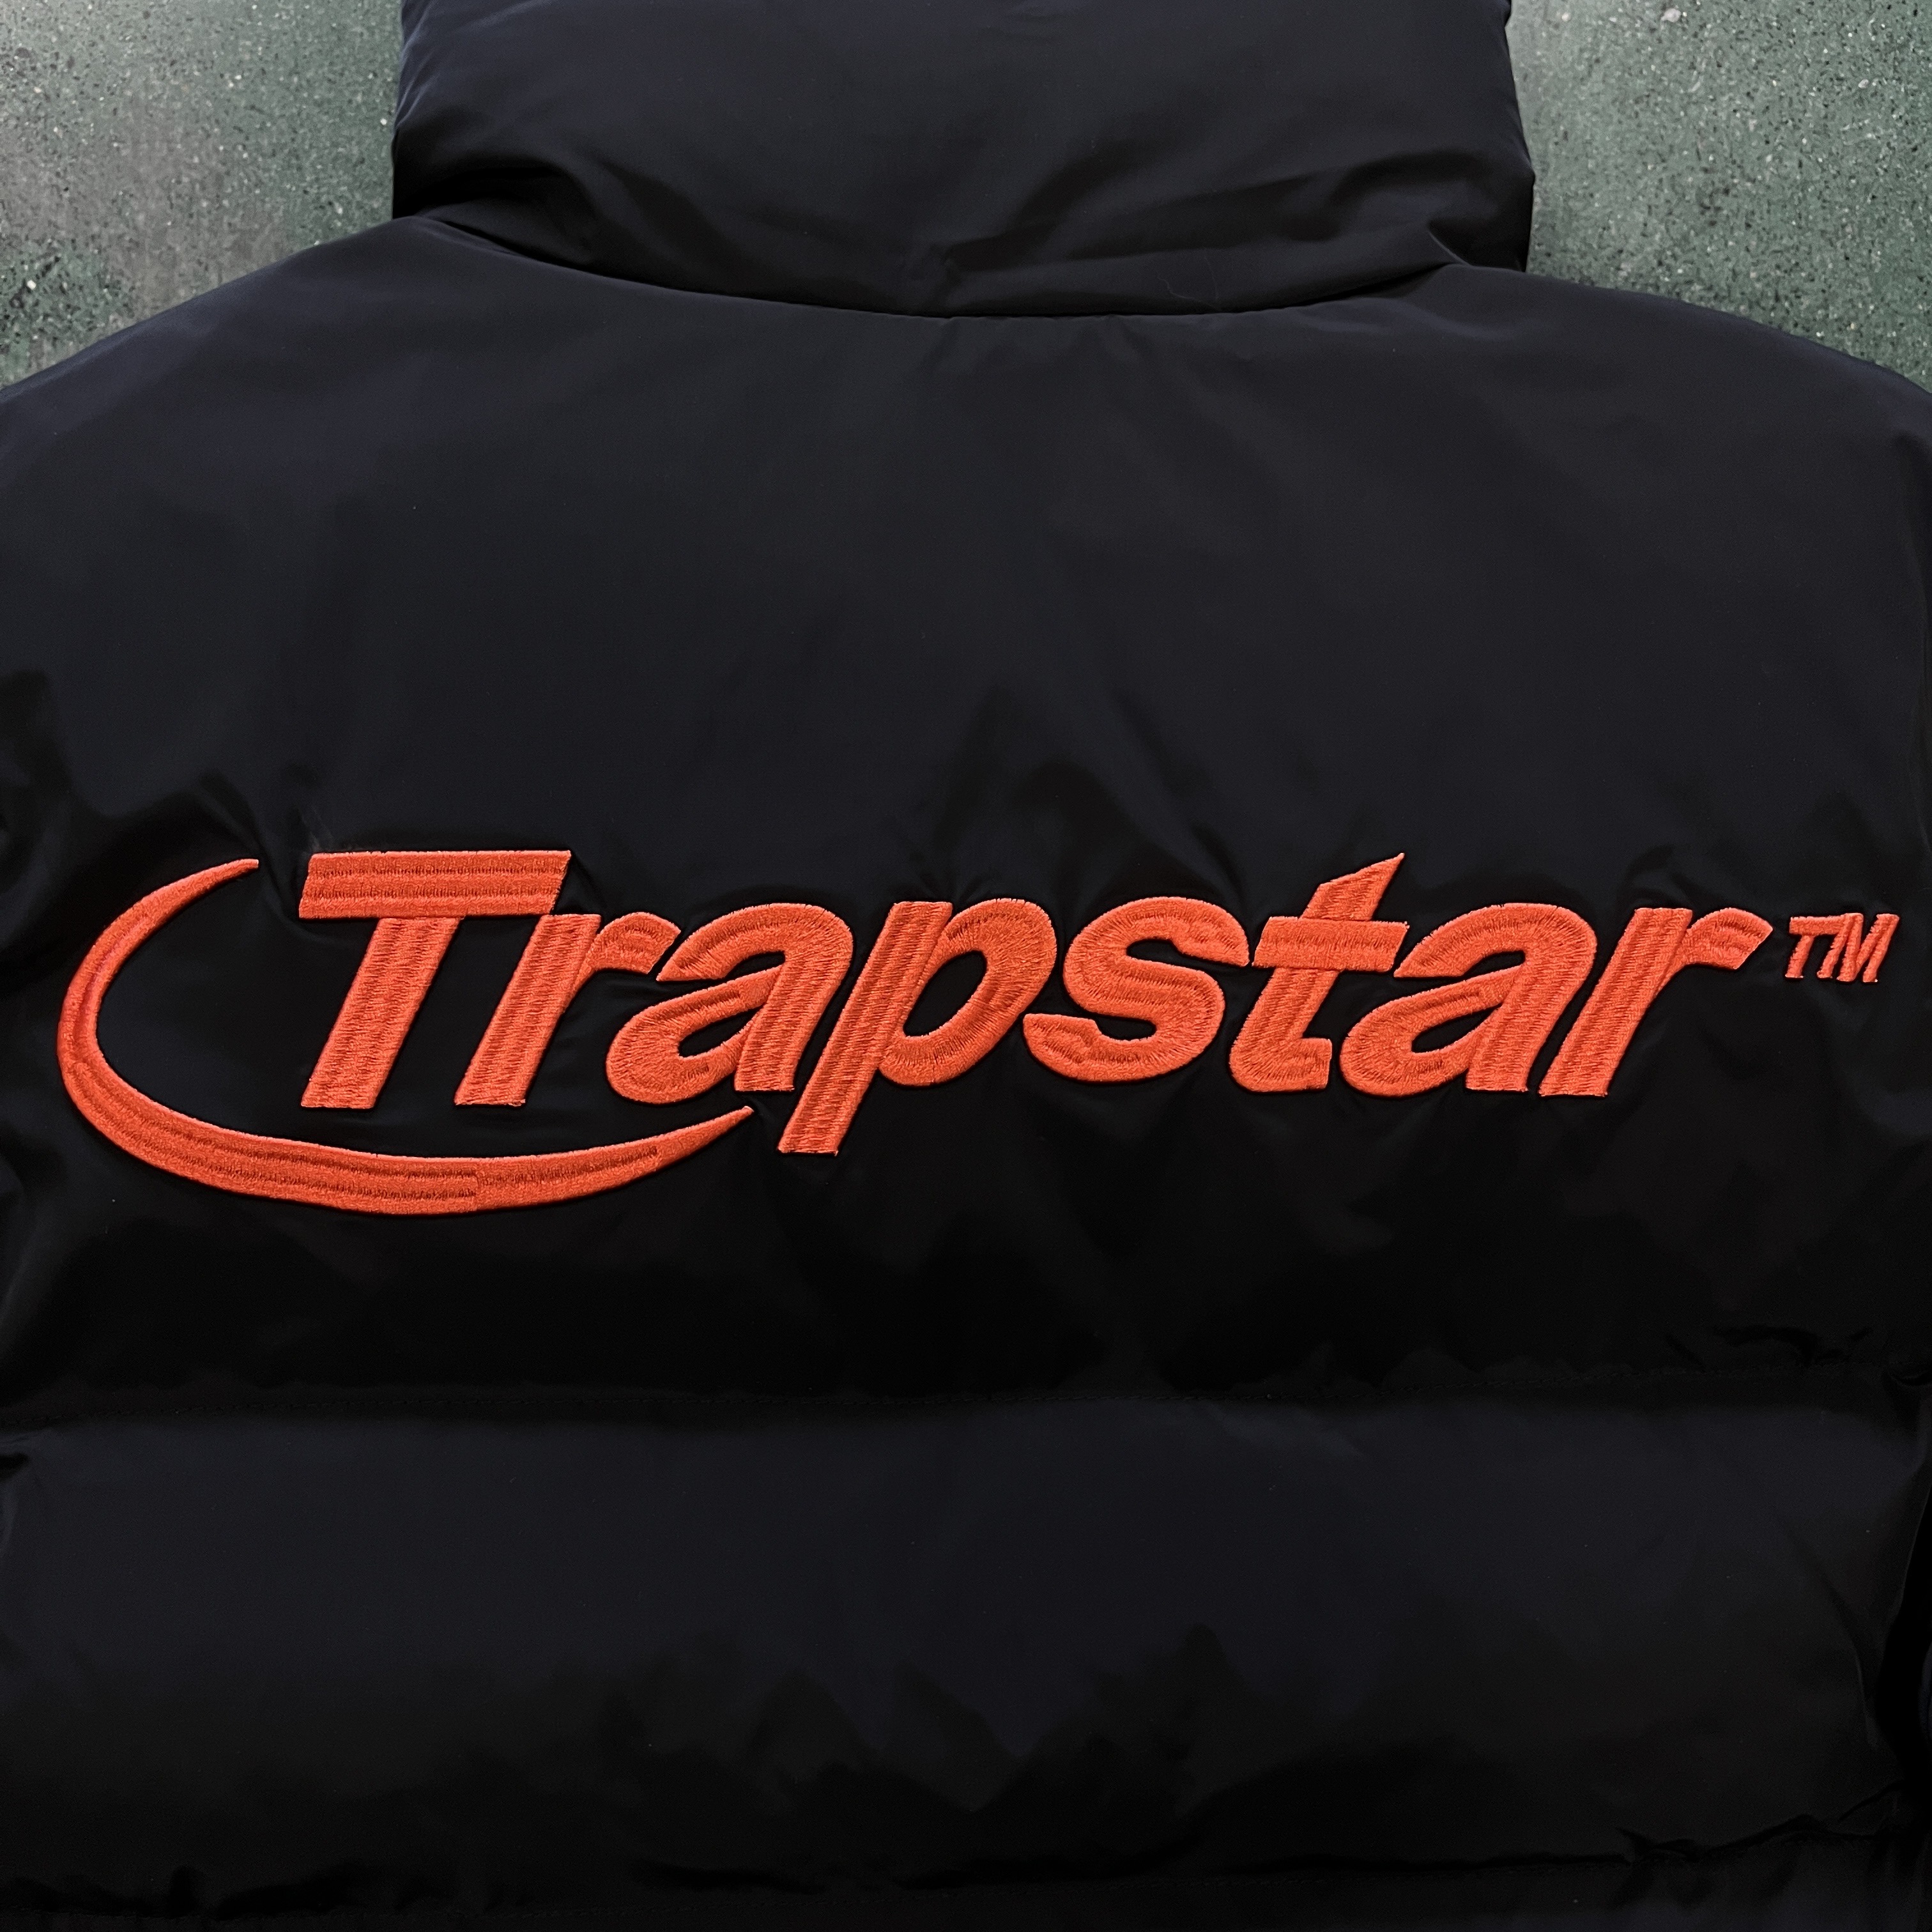 Herr Trapstar Down Jacket svartbl￥ broderi r￶d logotyp varm vit anka ner popul￤ra London street hip-hop rappare